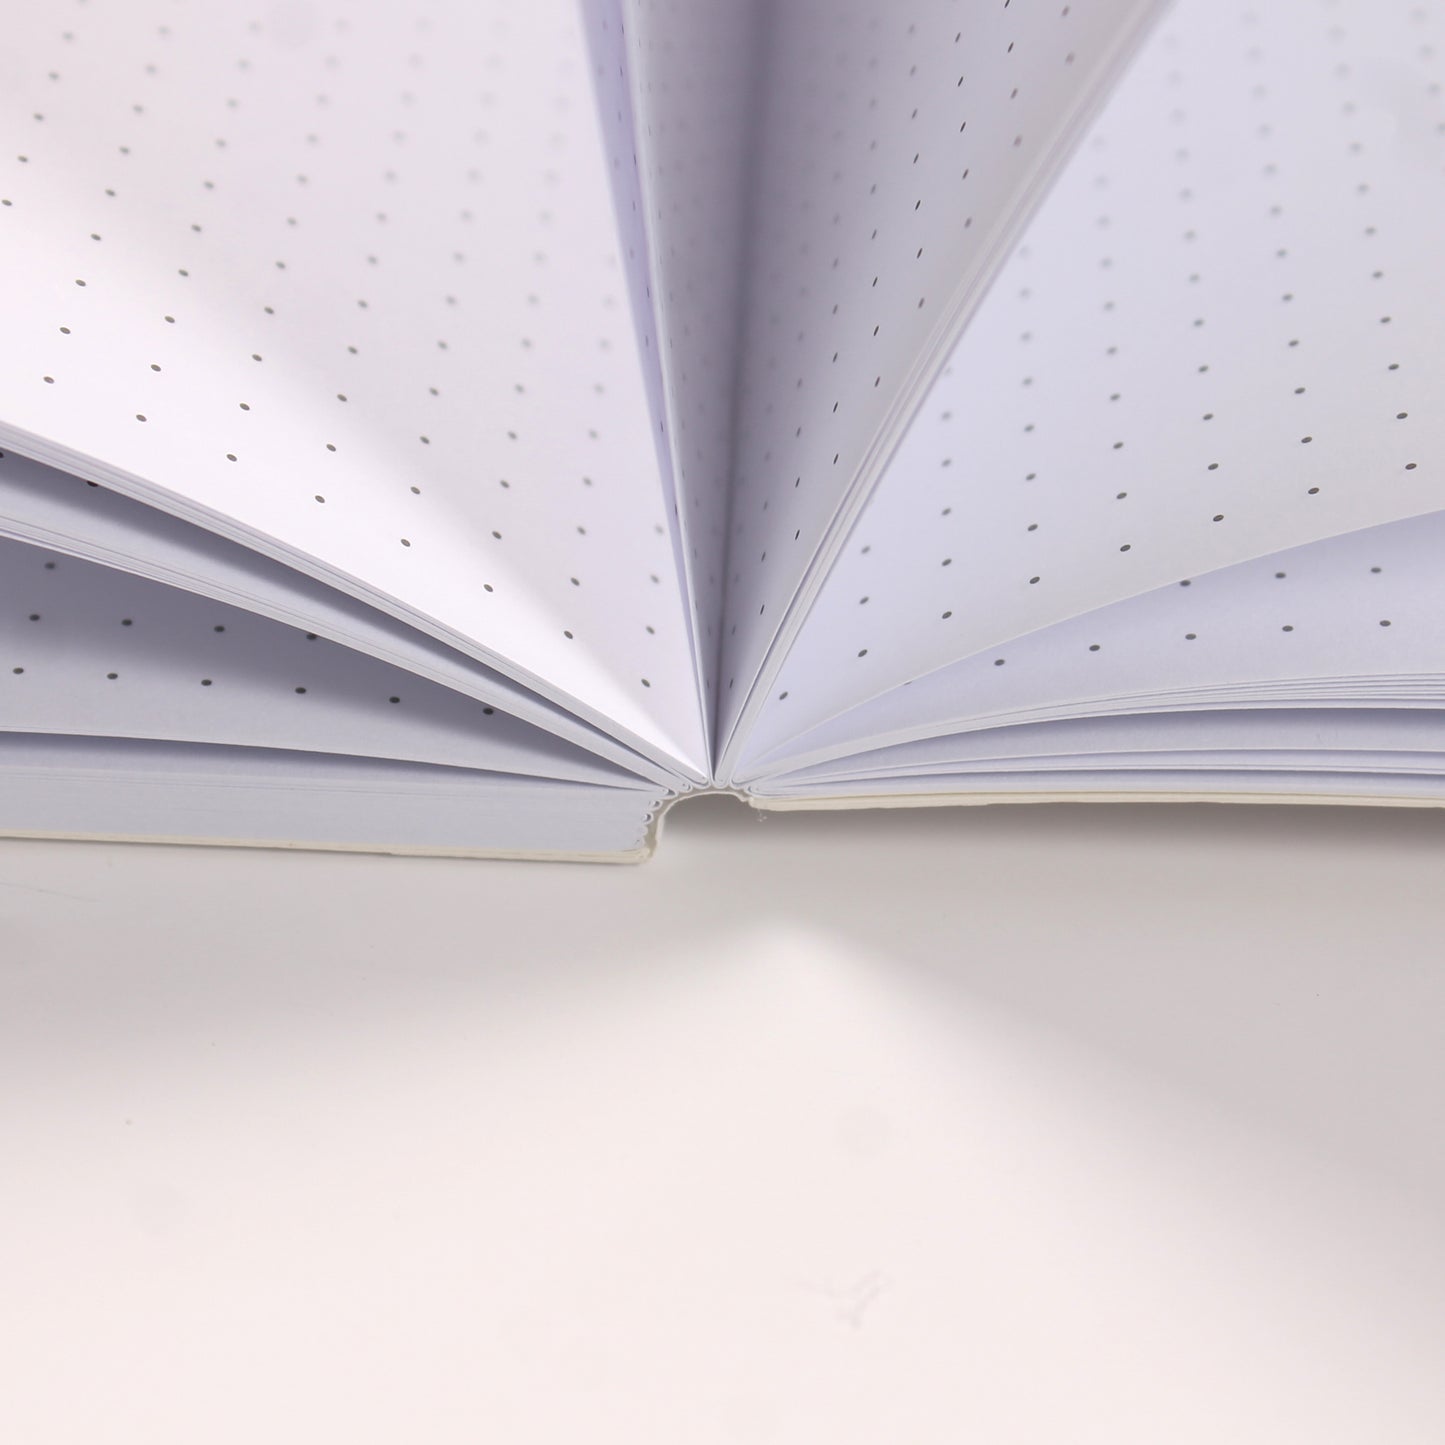 JoyToken Notebook Journal Refill A5 Nachfüllbares Bullet Journal aus Leder